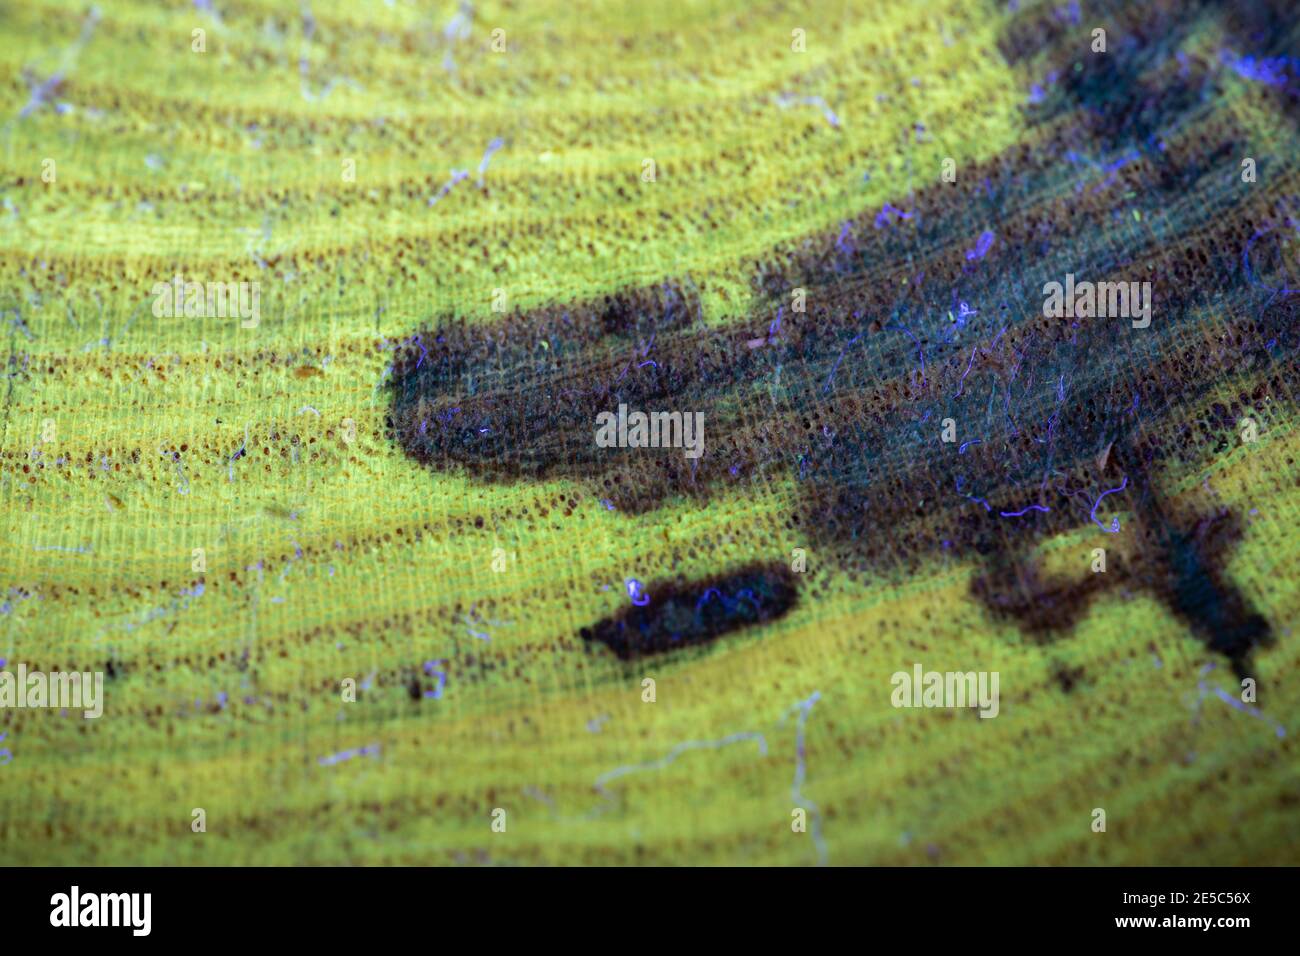 The grain of black locust wood under UV light, displaying characteristic green fluorescence. Stock Photo